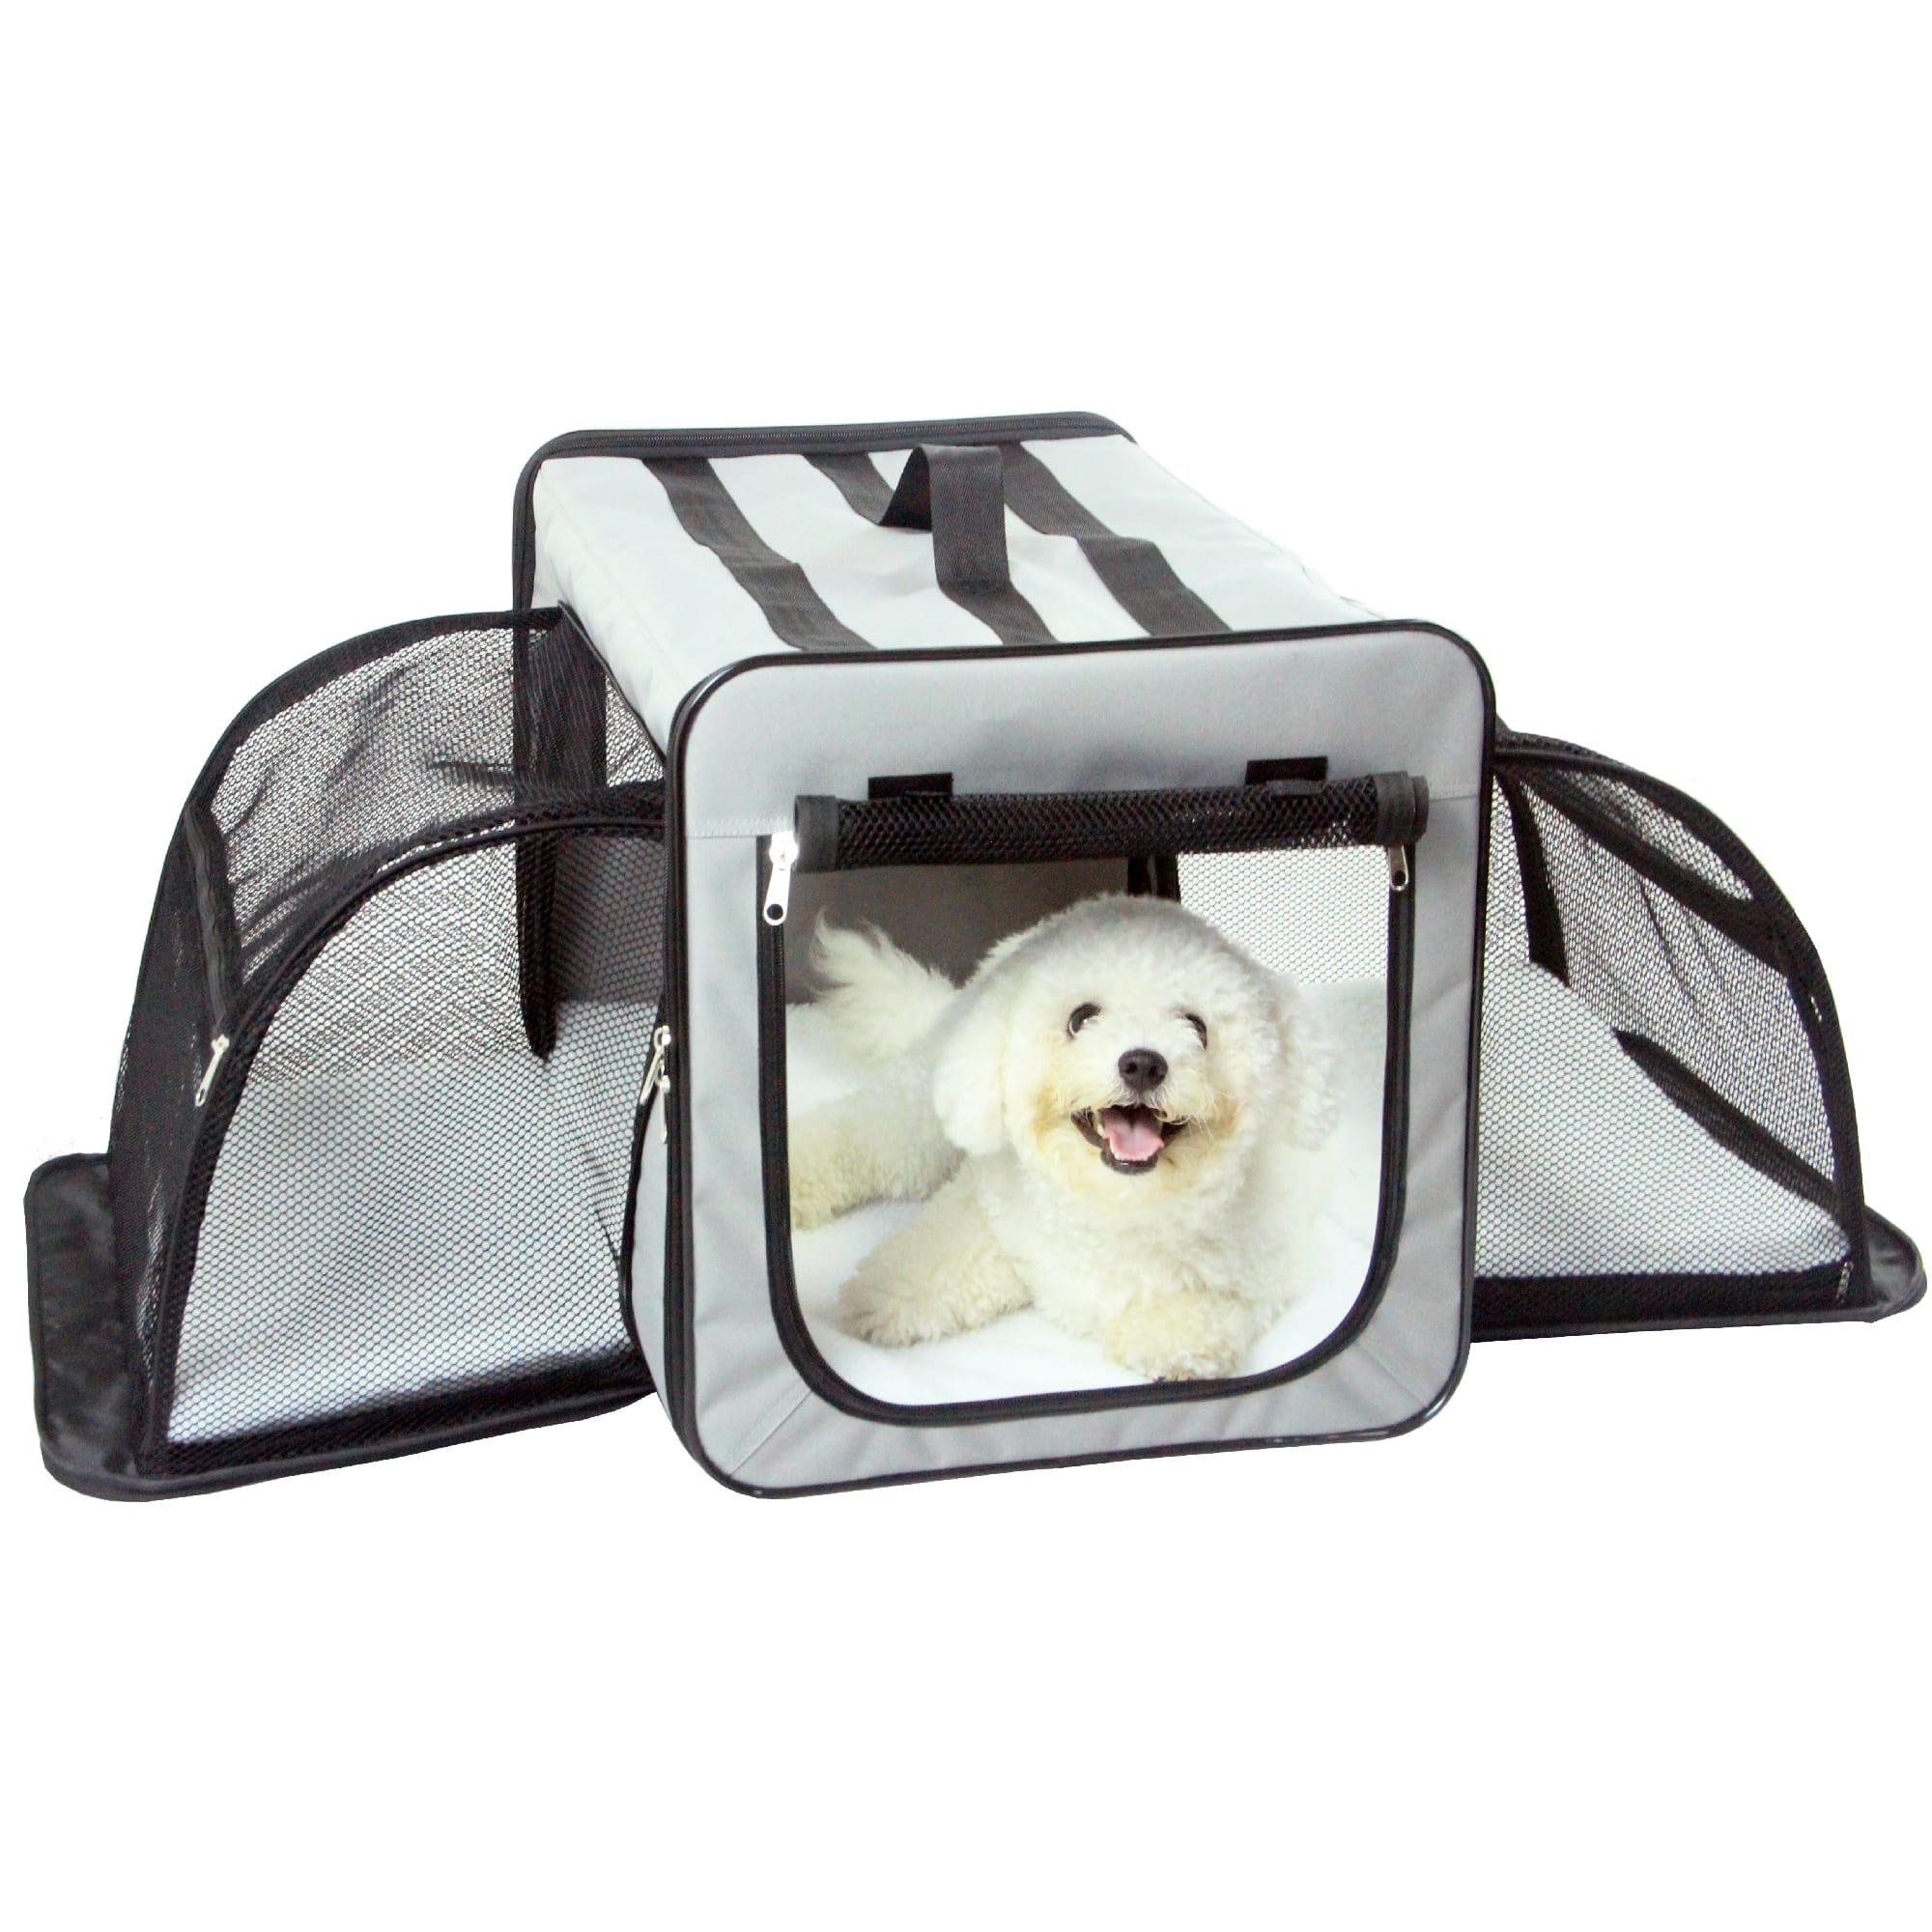 Armarkat FoldIng Soft Dog Crate for Pets, 19.5 L X 13.6 W X 13.8